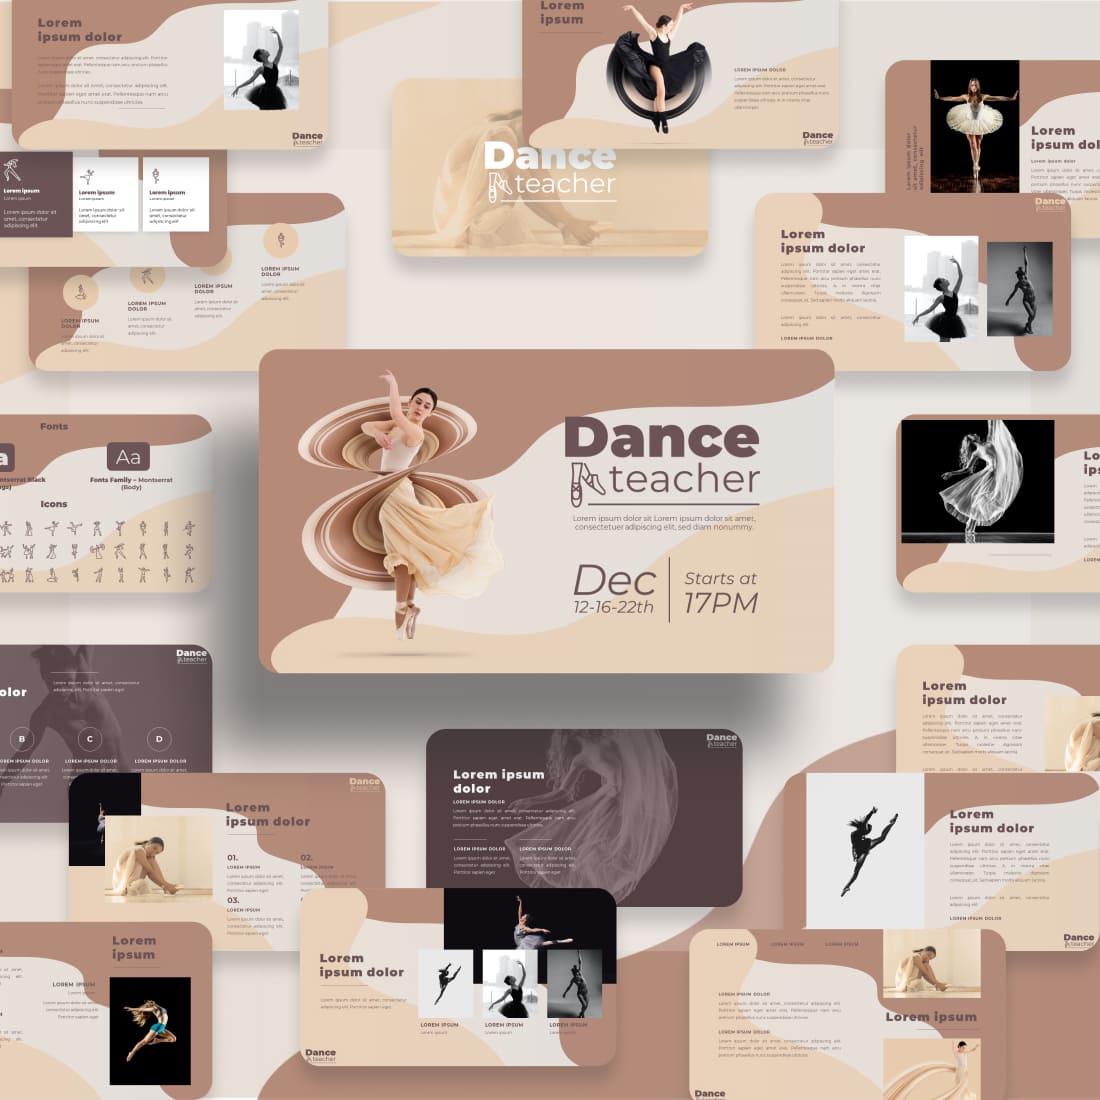 Danceteacher powerpoint template cover image.